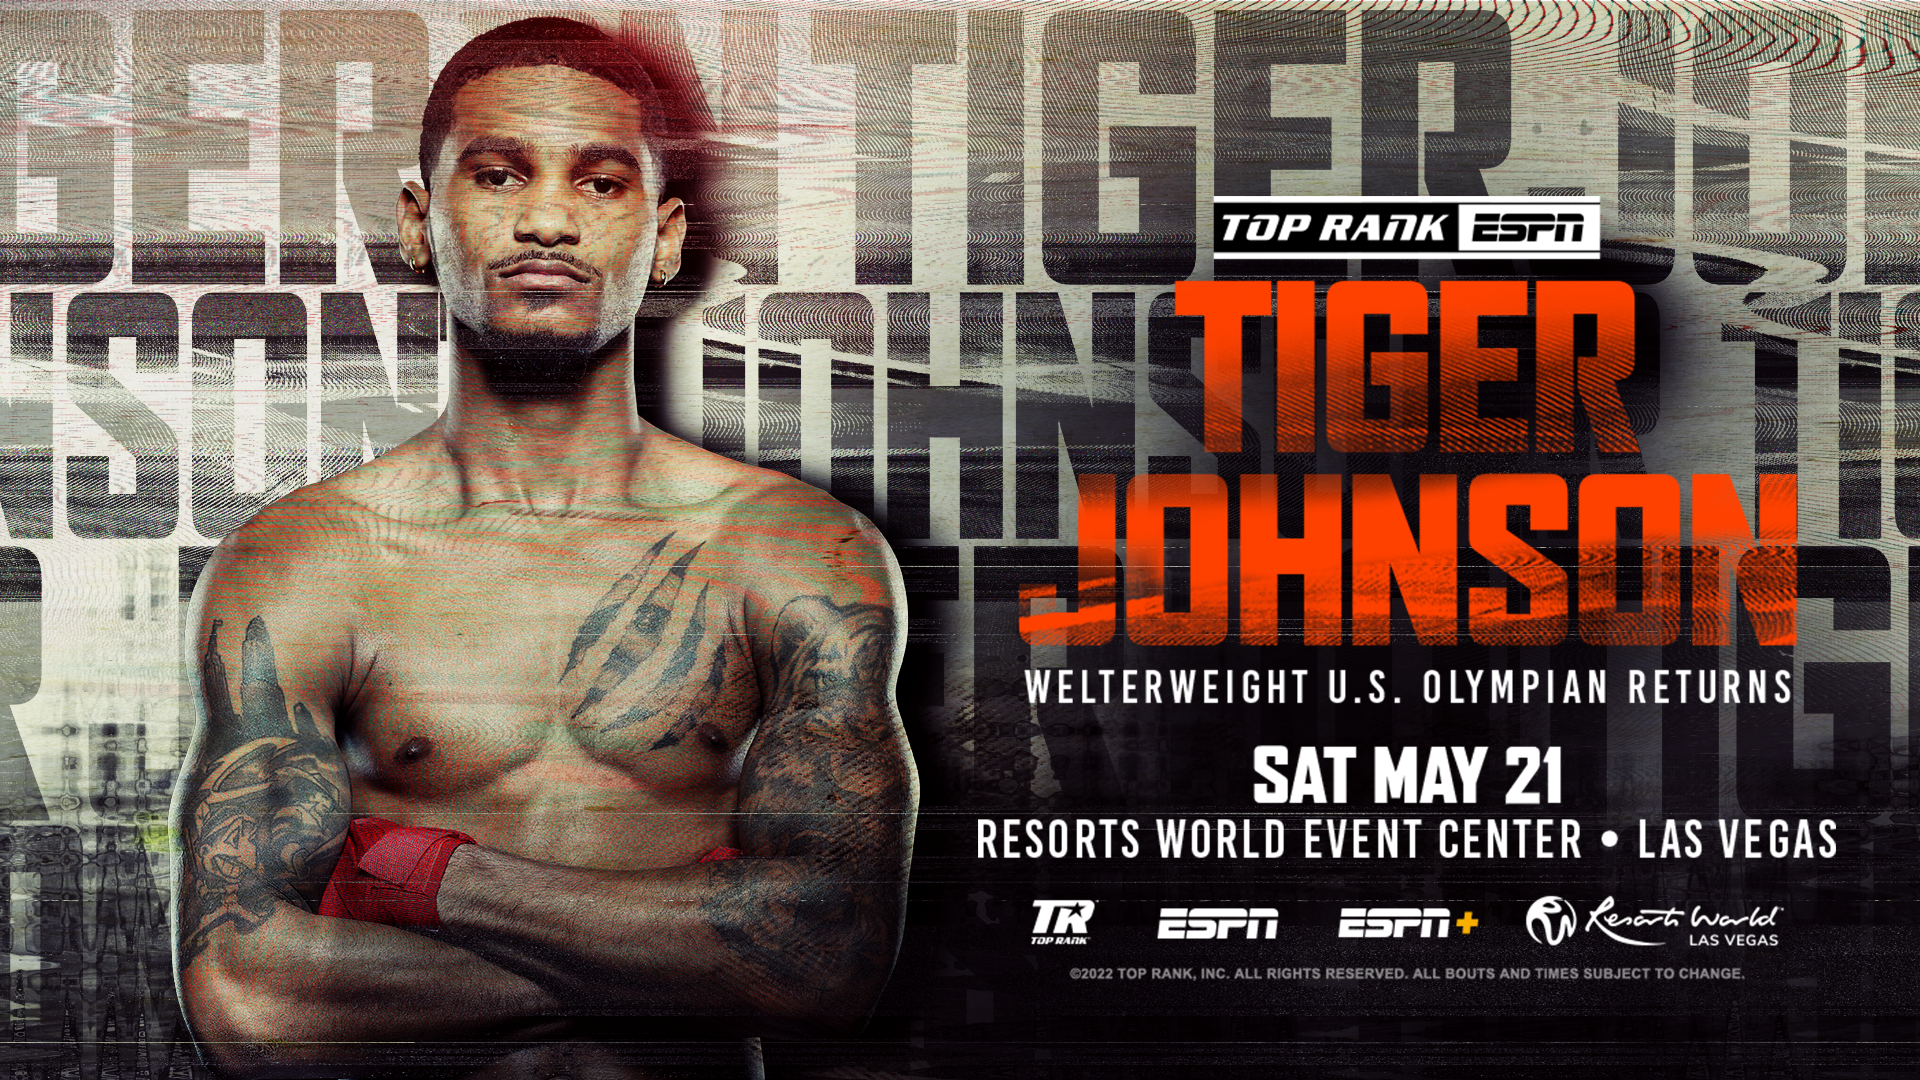 May 21: U.S. Olympian Tiger Johnson Added to Alimkhanuly-Dignum ESPN Telecast at Resorts World Las Vegas